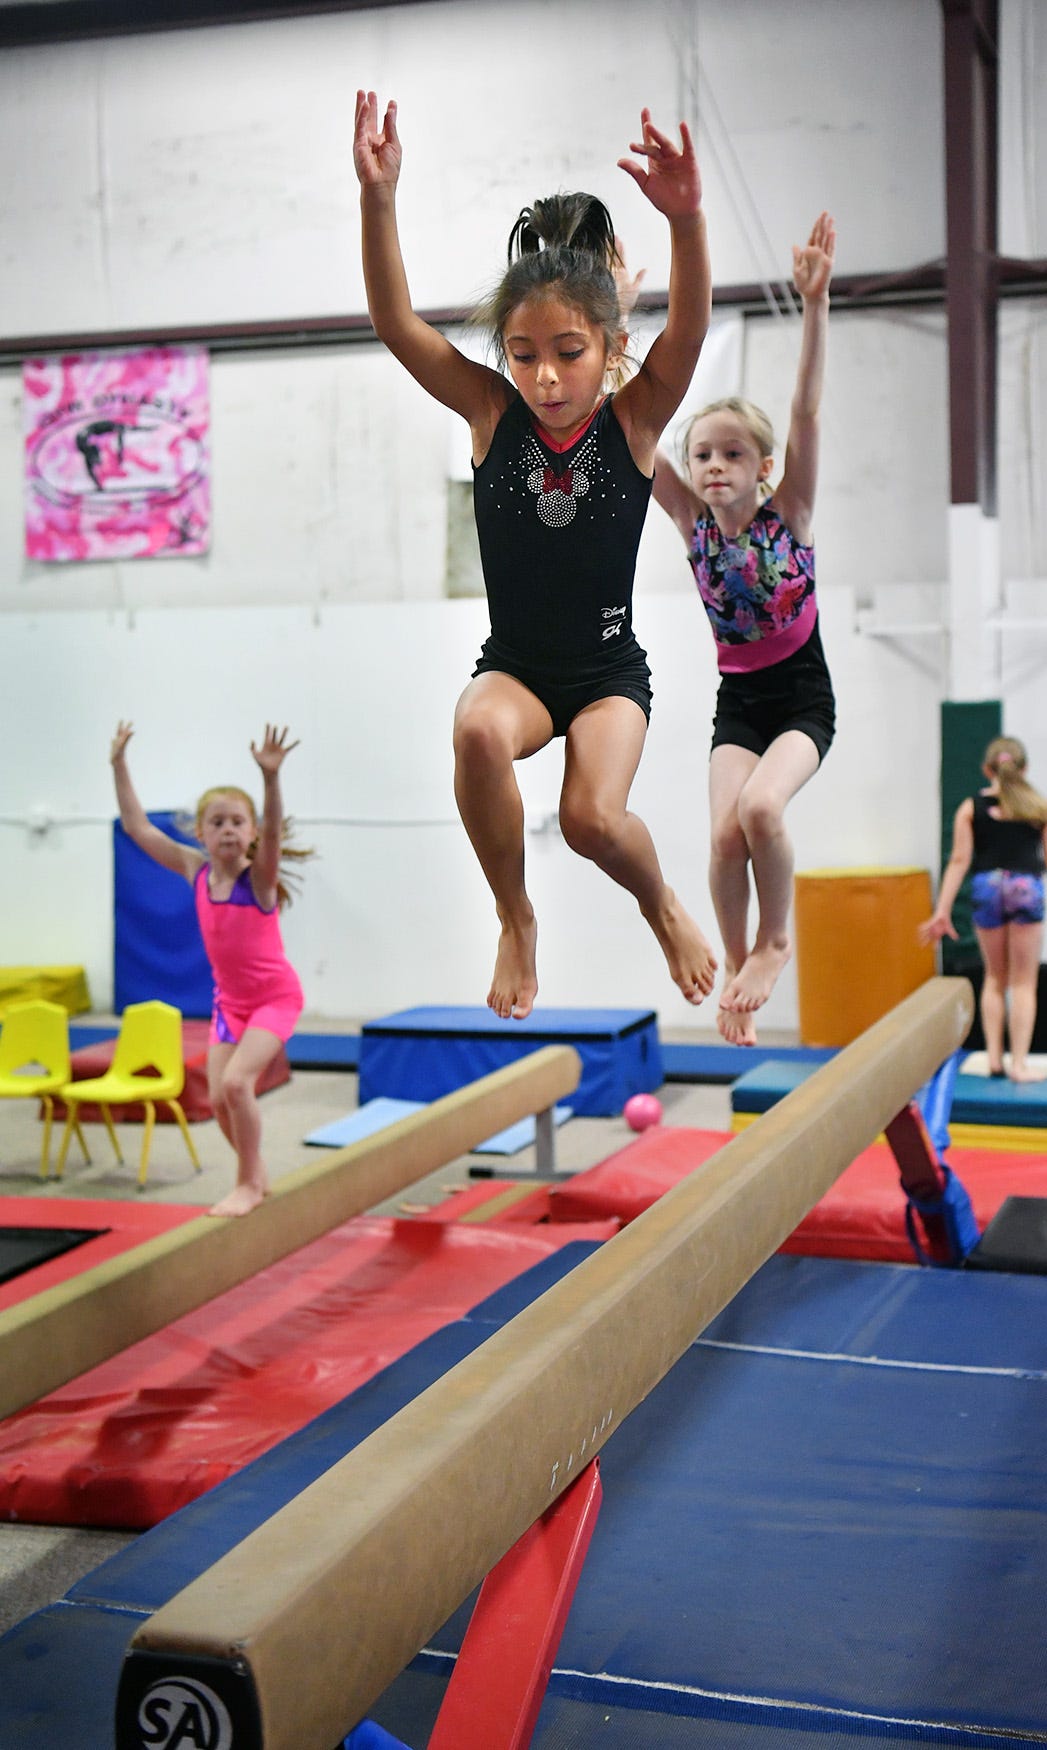 missy and joe cronin just opened gymnastics sports center new business in wichita falls opened gymnastics sports center